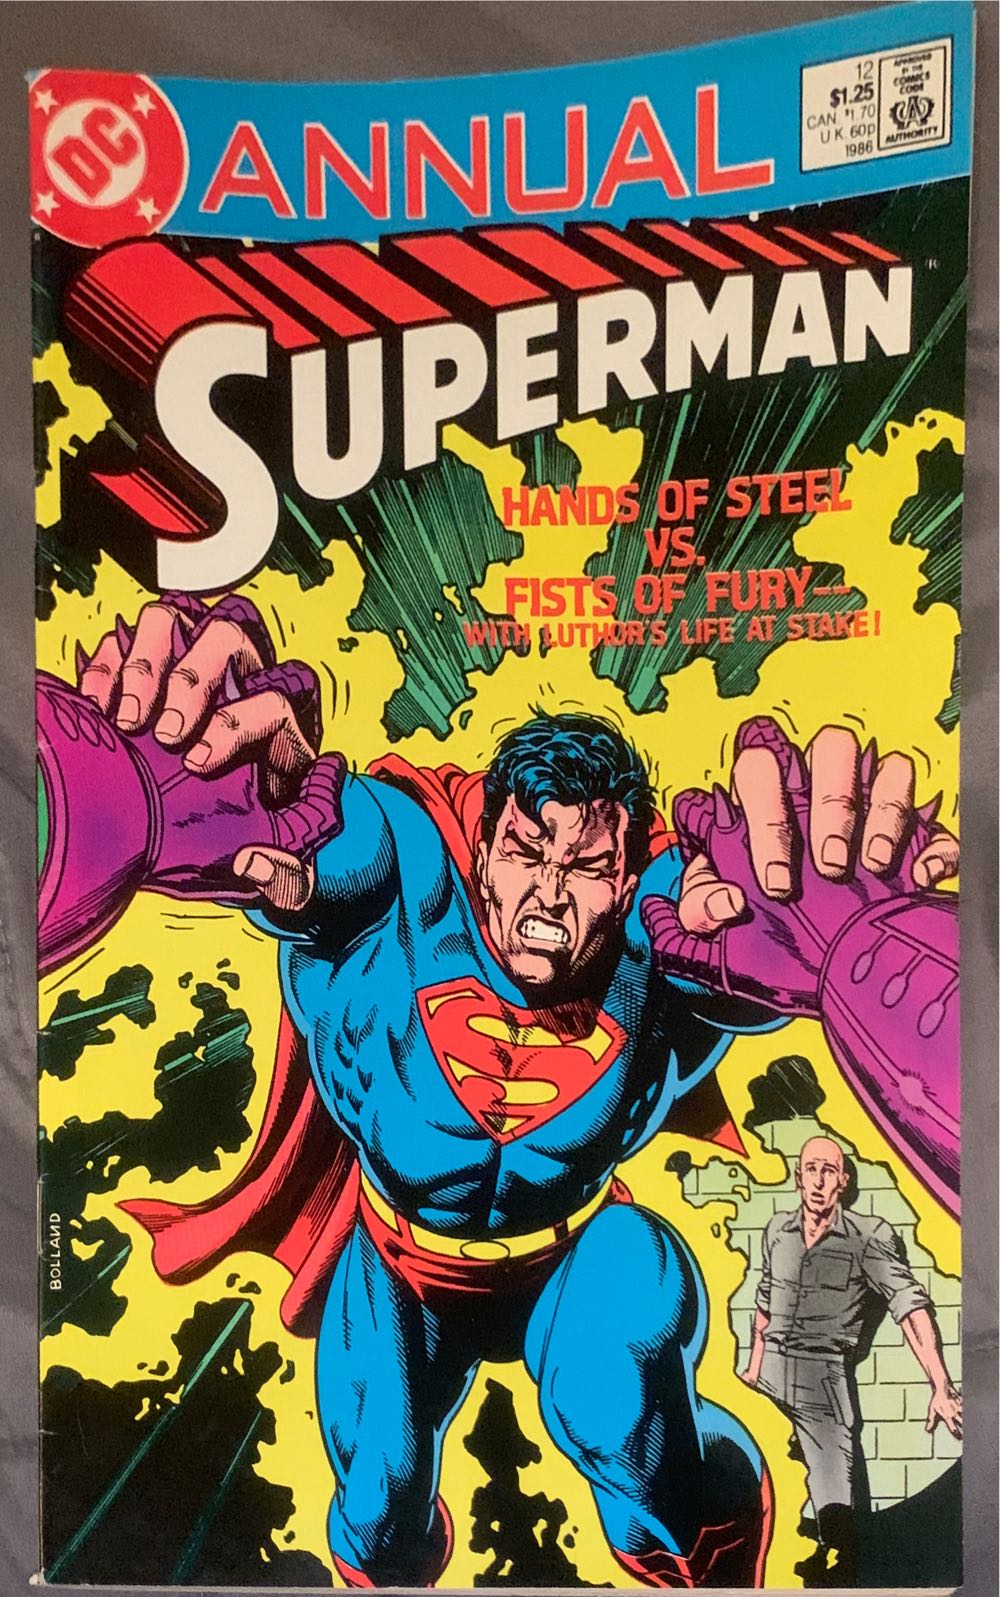 Superman Vol 1 Annual - DC Comics (12 - Aug 1986) comic book collectible [Barcode 070989332911] - Main Image 2